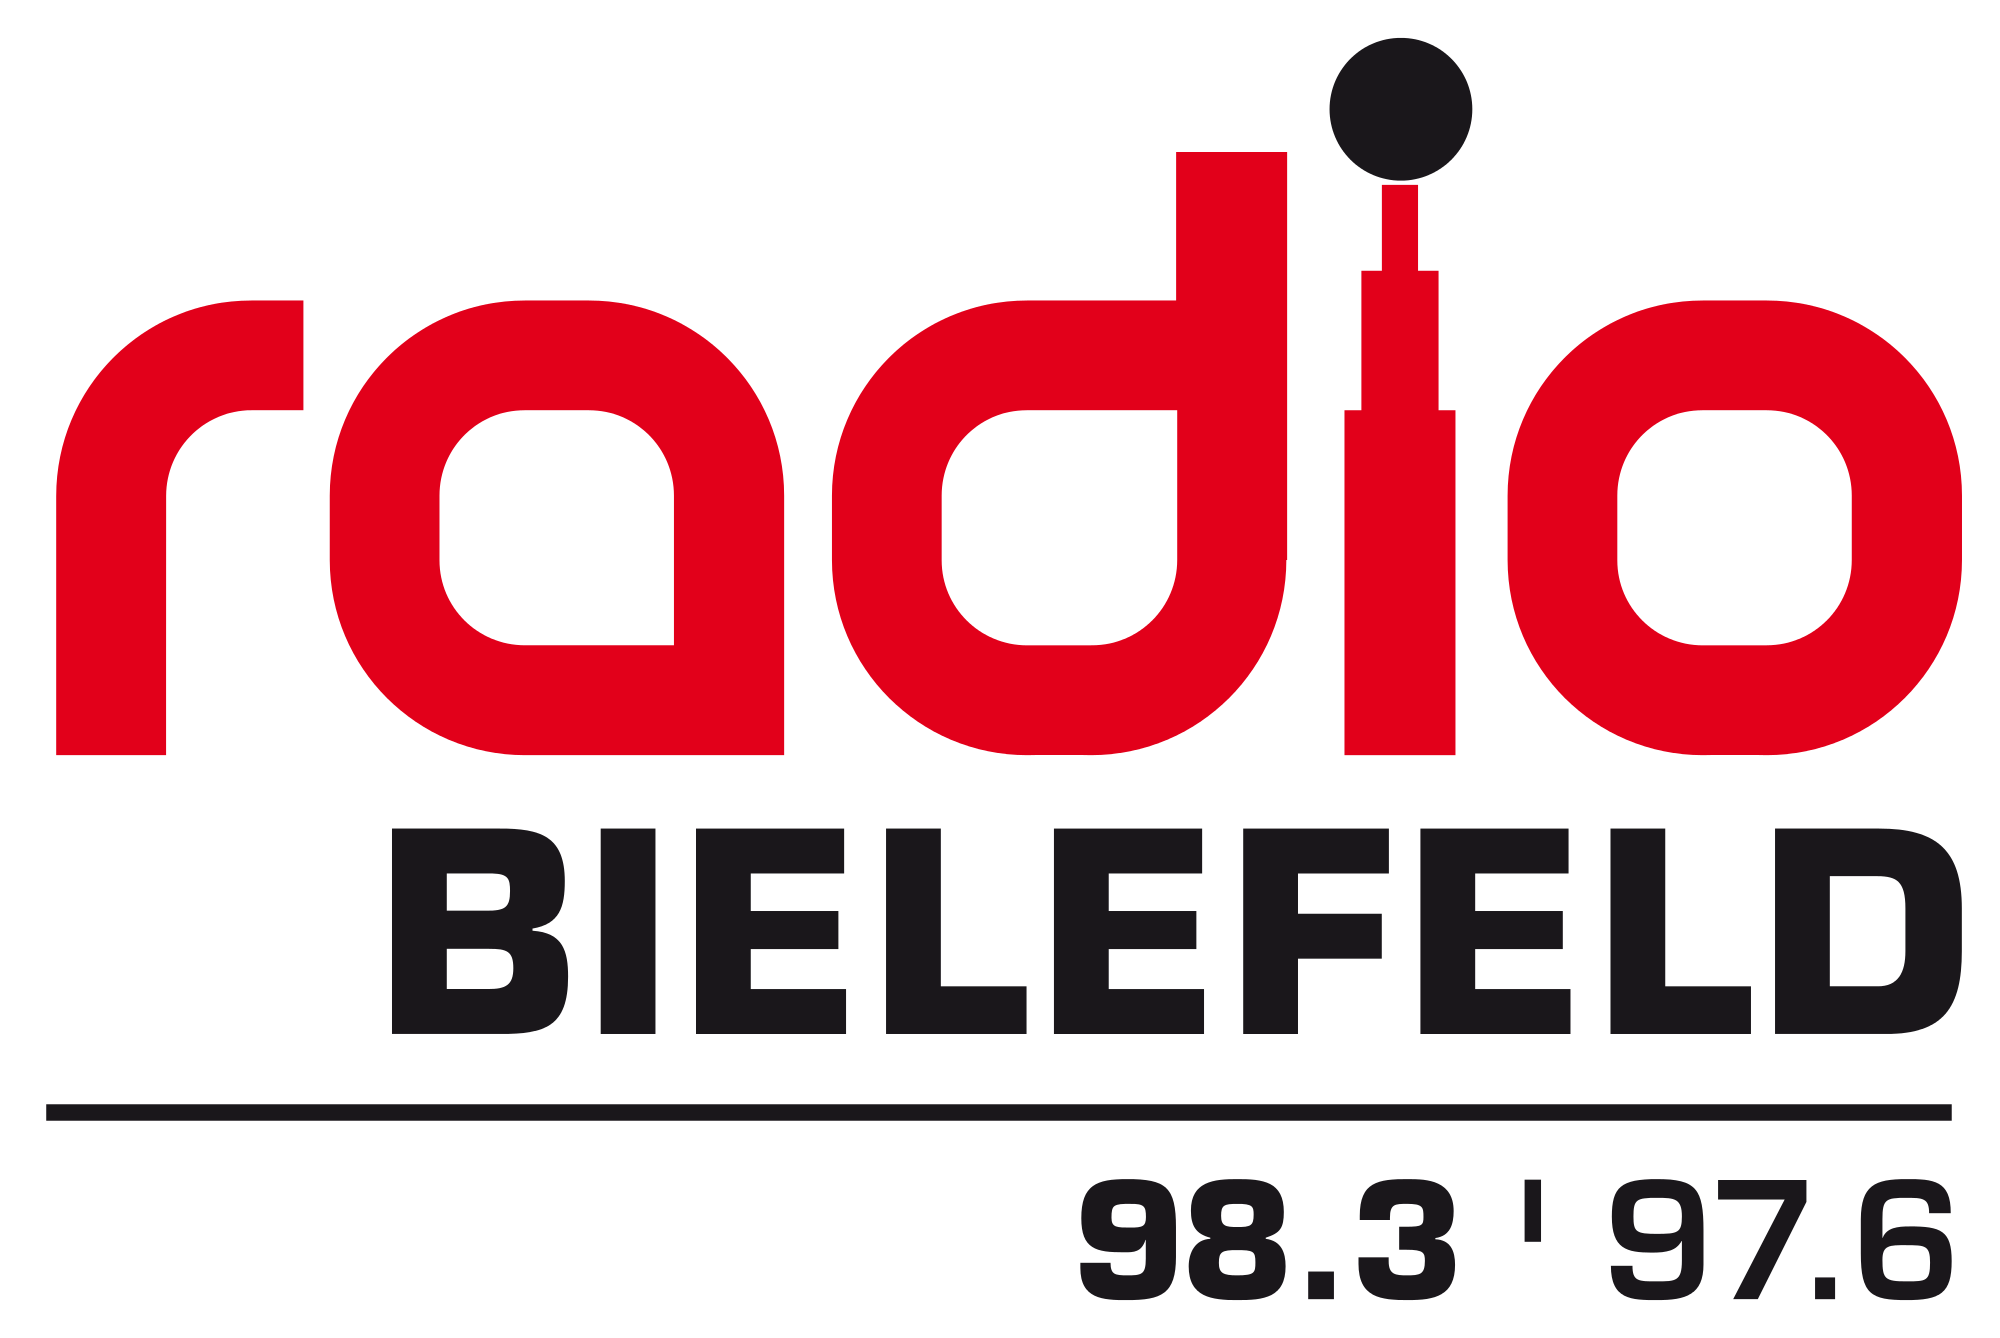 Radio Bielefeld